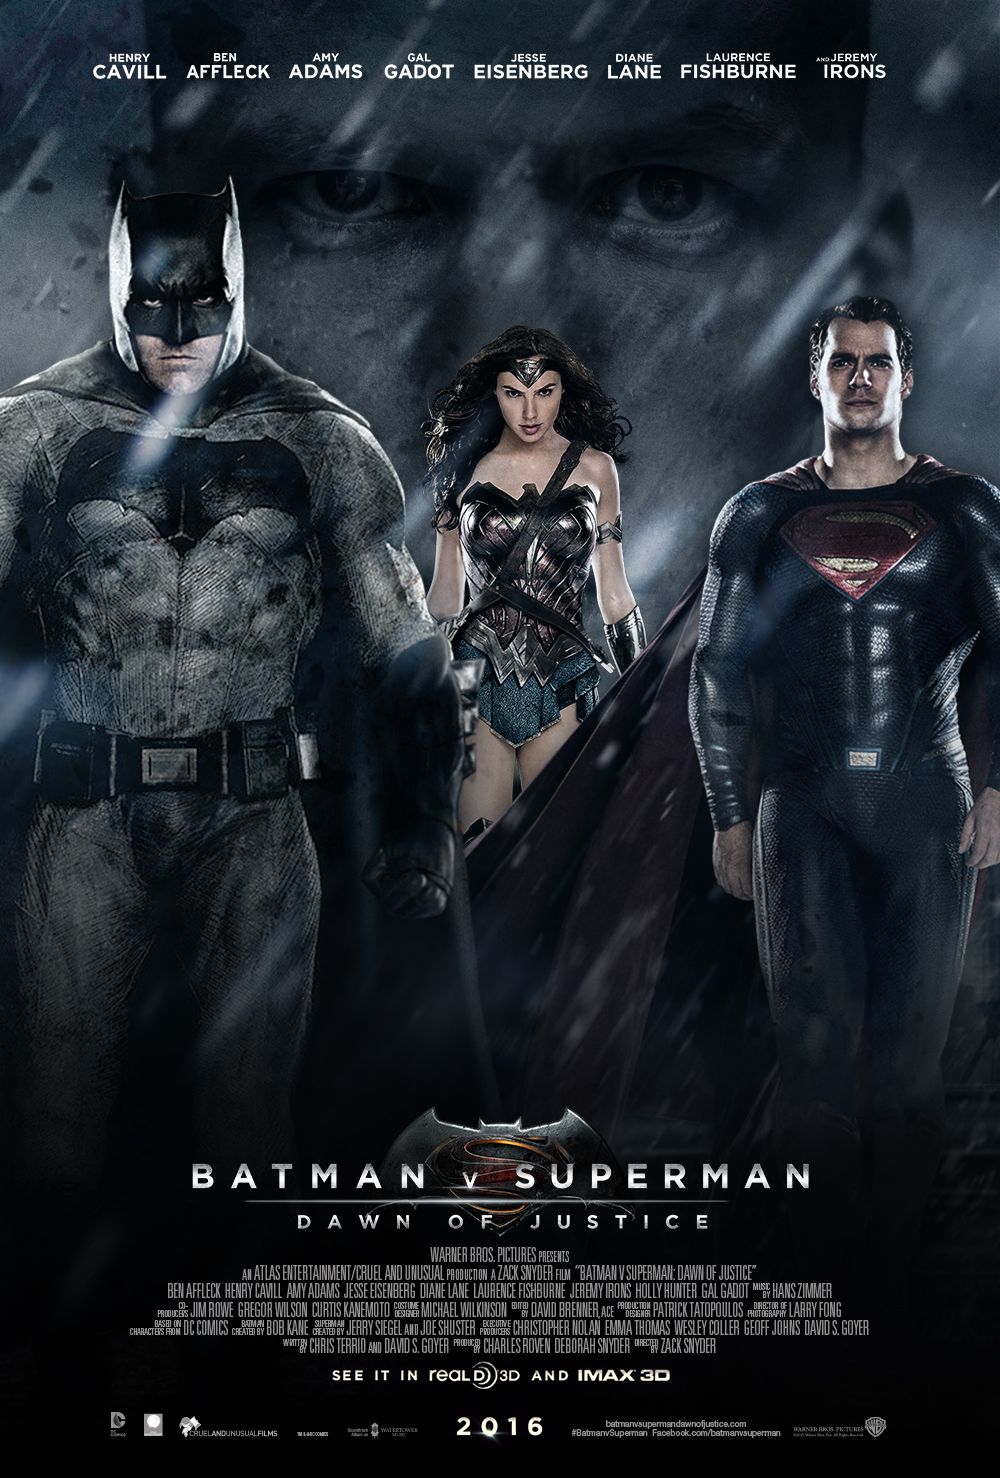 Superman Vs Batman 1080p Movie Download Torrent